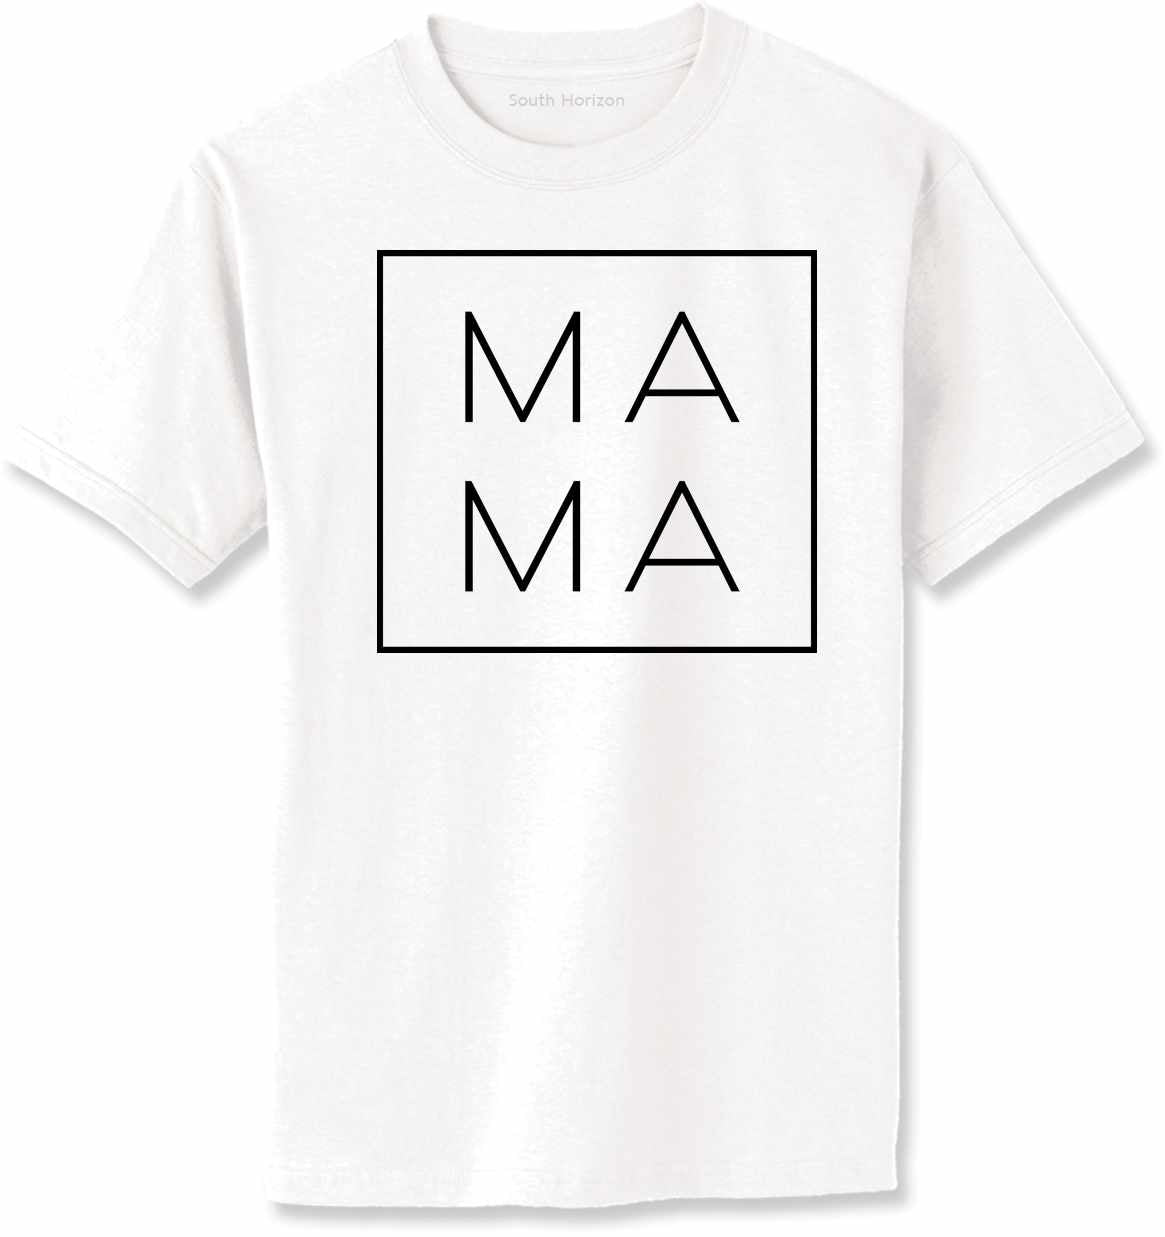 MA MA - Box on Adult T-Shirt (#1251-1)